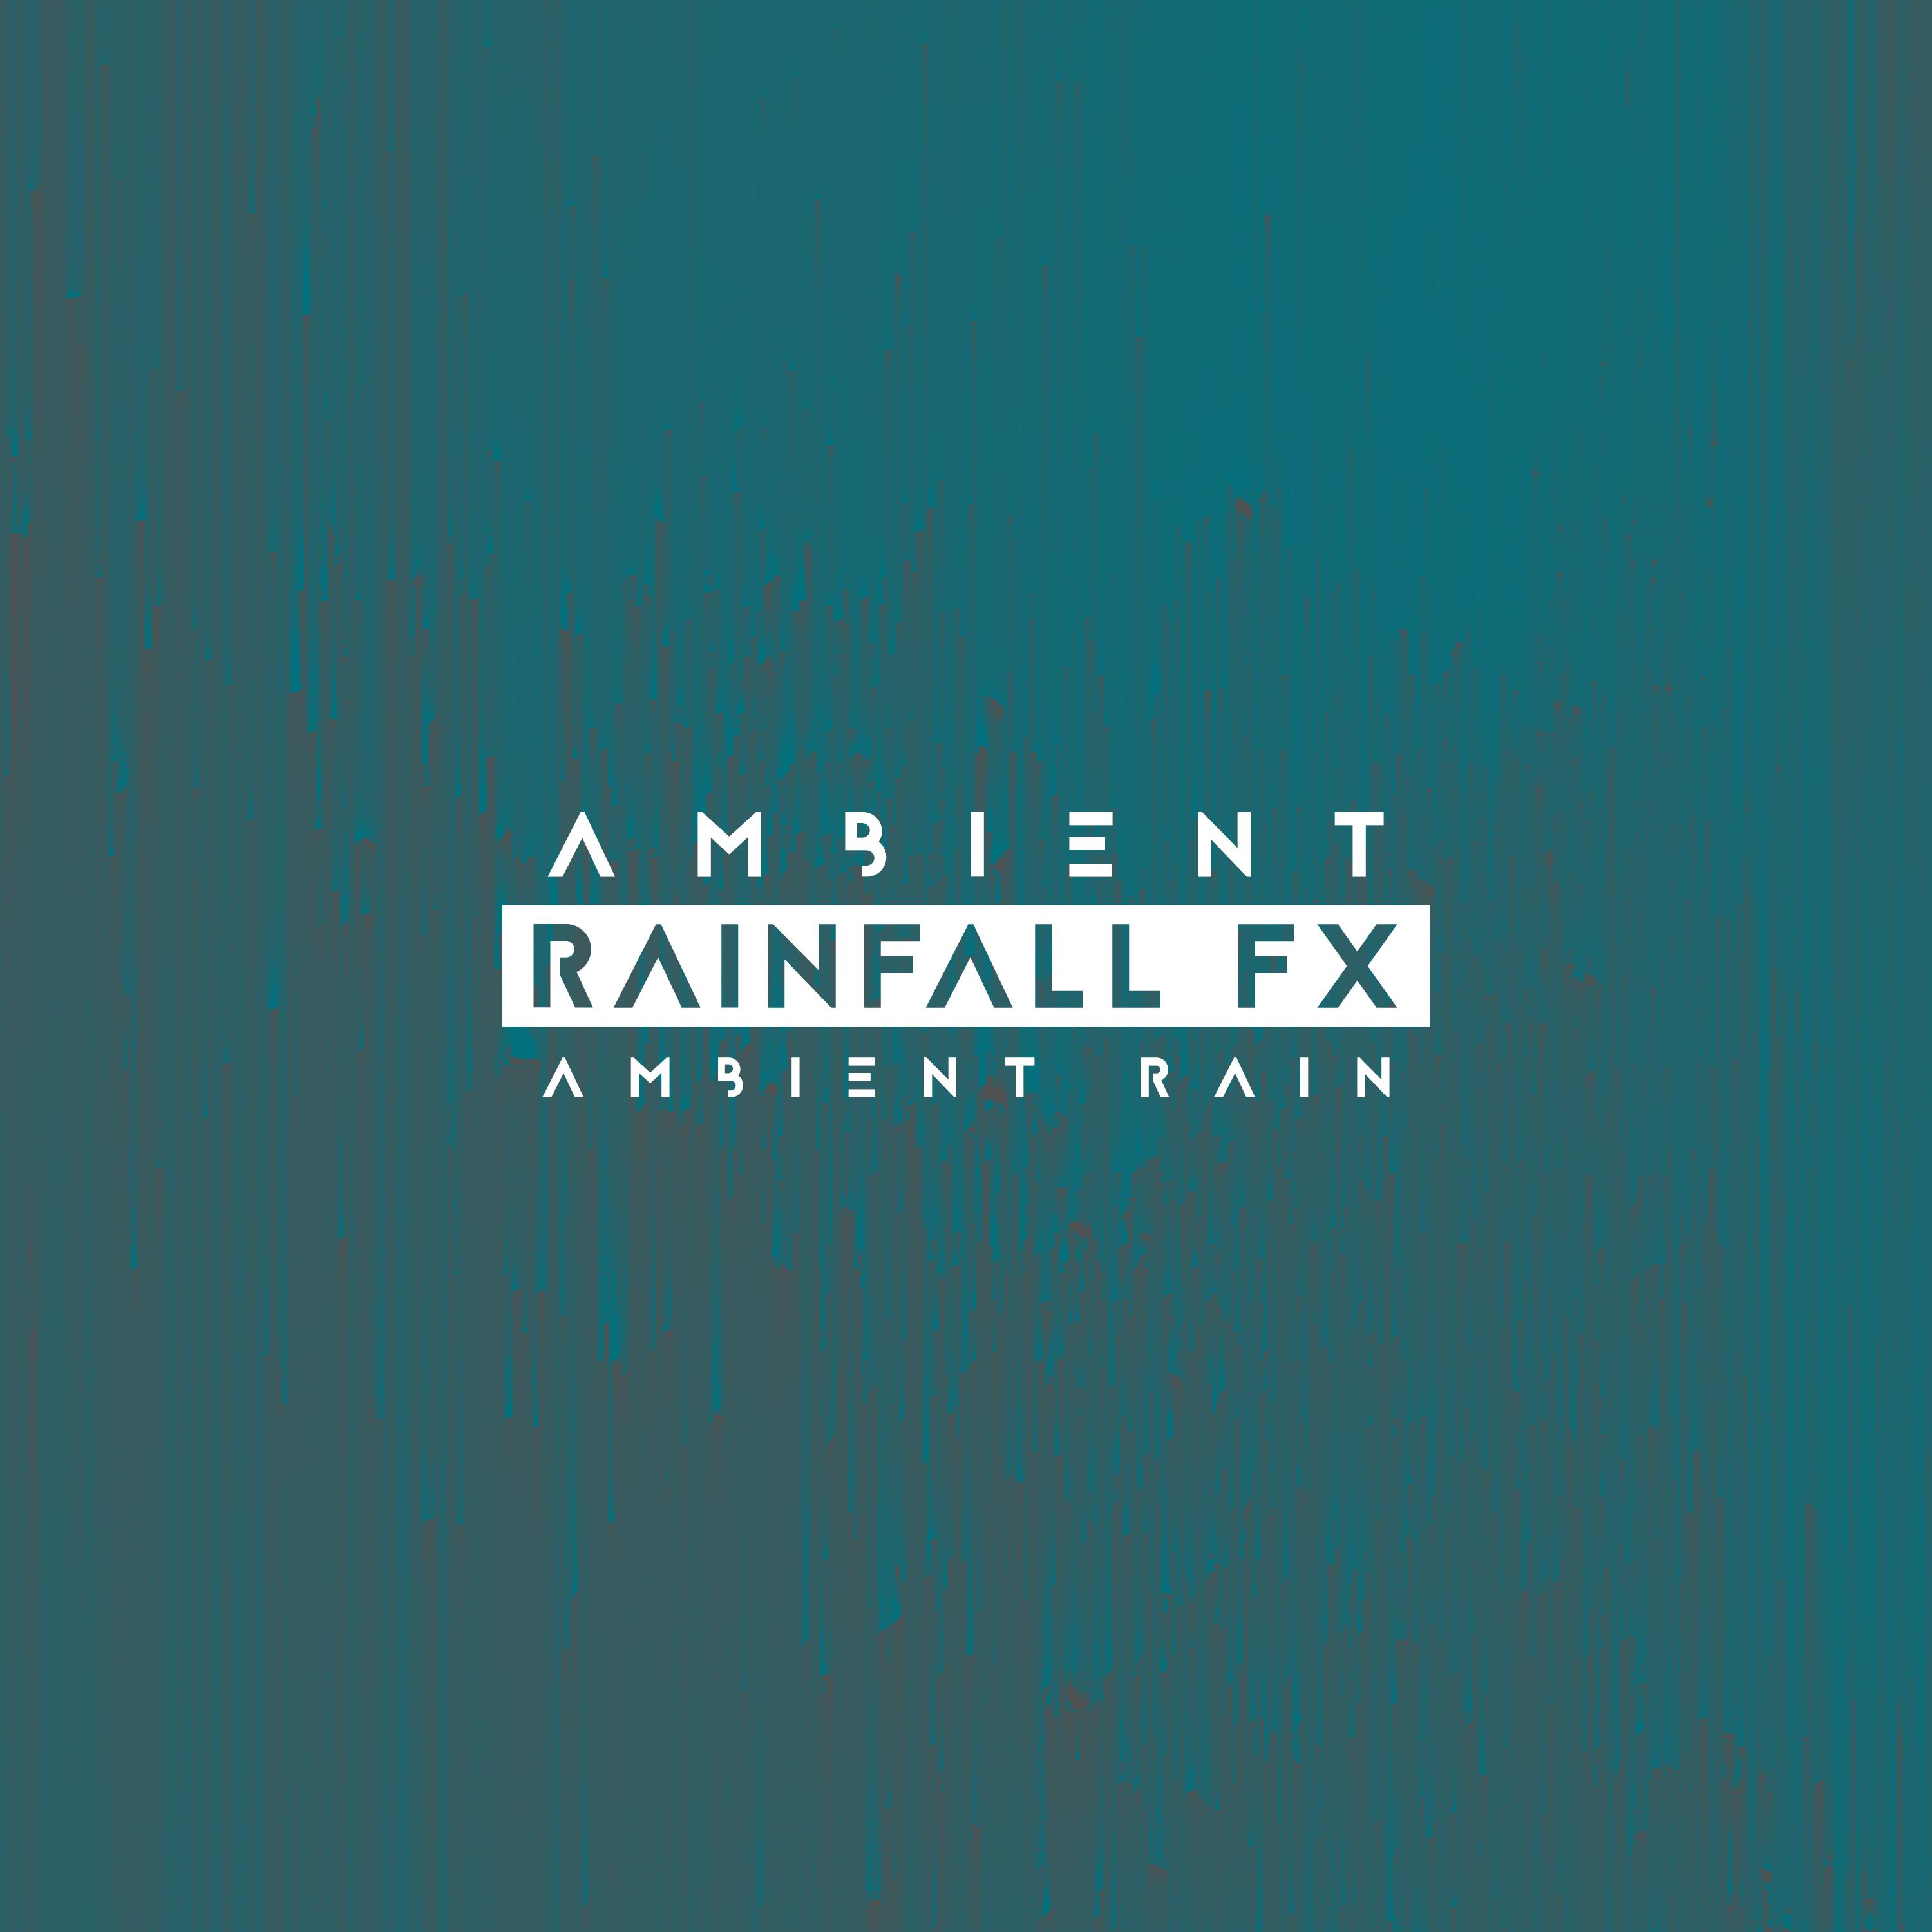 Ambient Rainfall FX